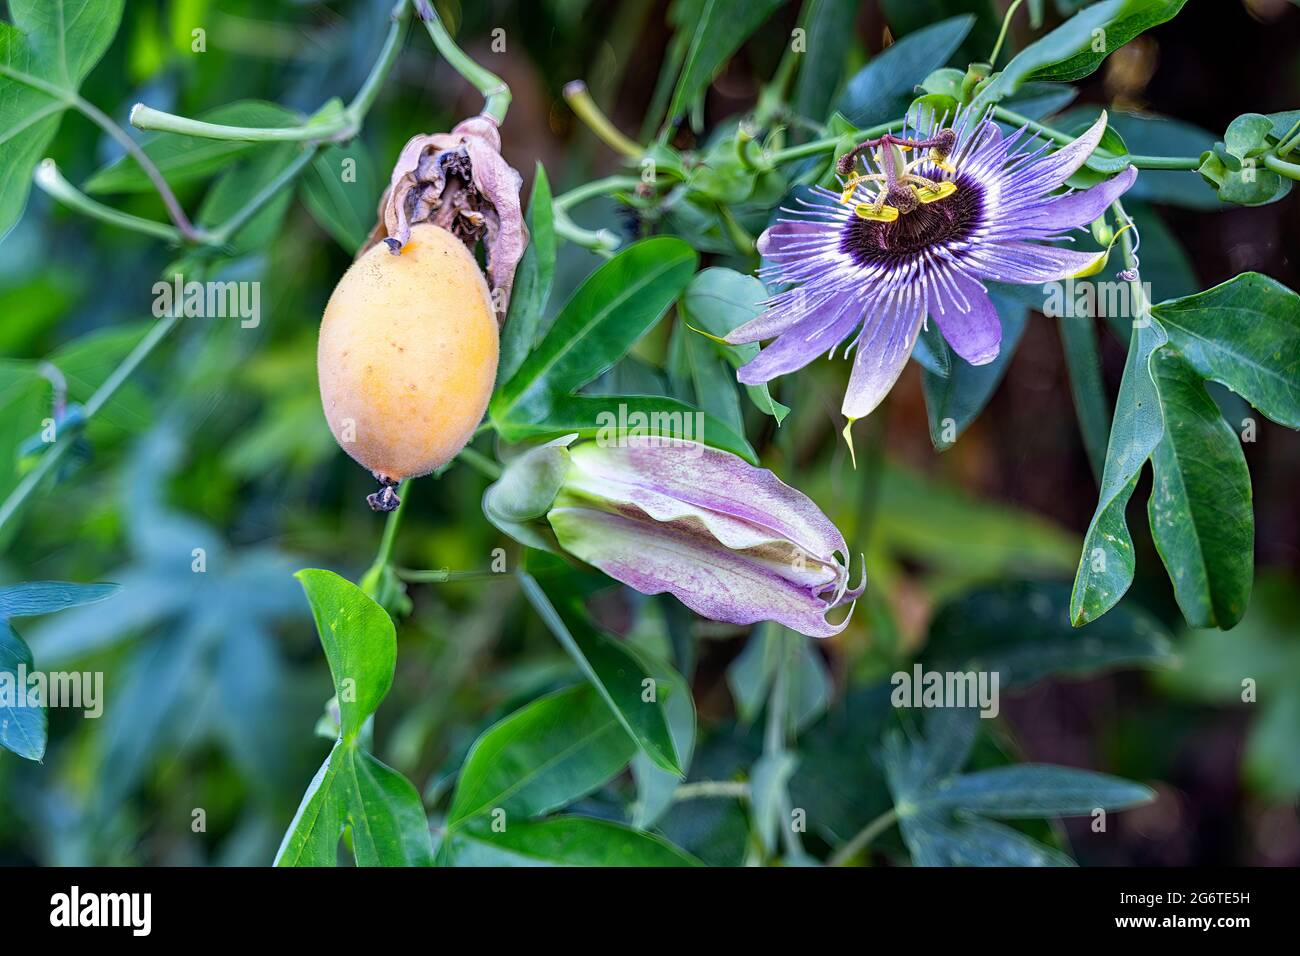 Purple blue passion flower (Passiflora incarnata ) with ripe yellow passion fruit (maypop) growing on vine. Stock Photo